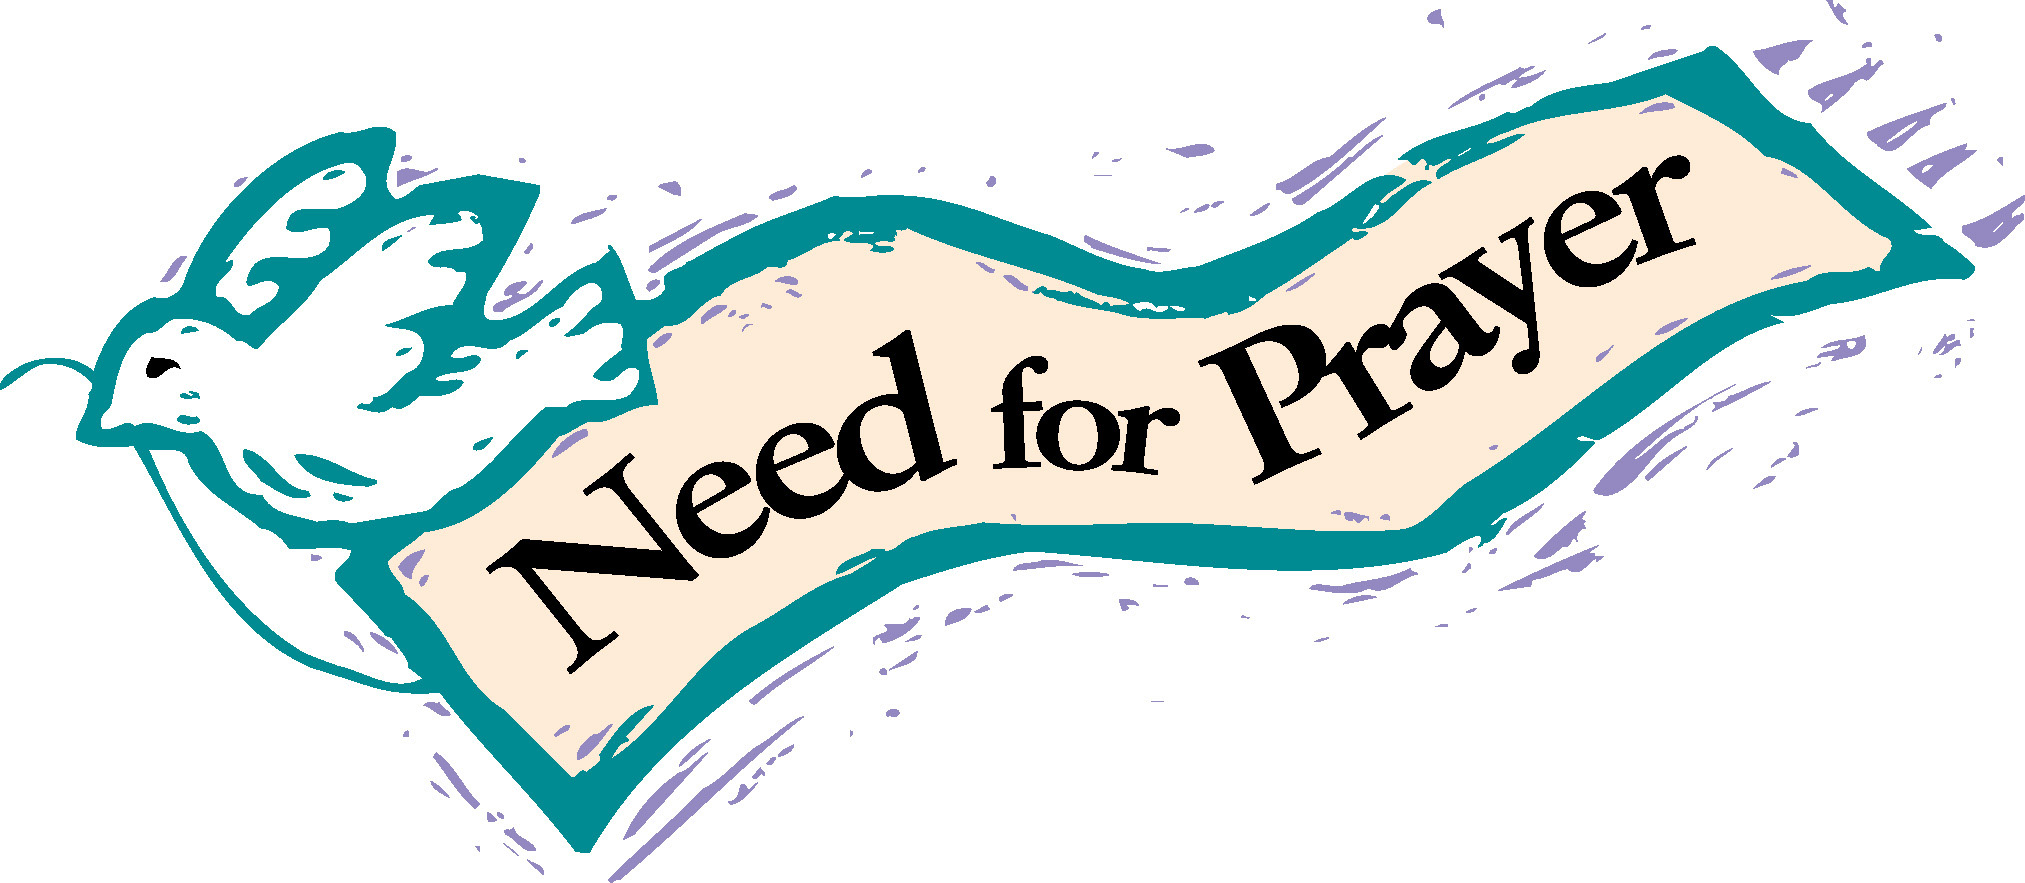 Prayer Request Kid Hd Image Clipart